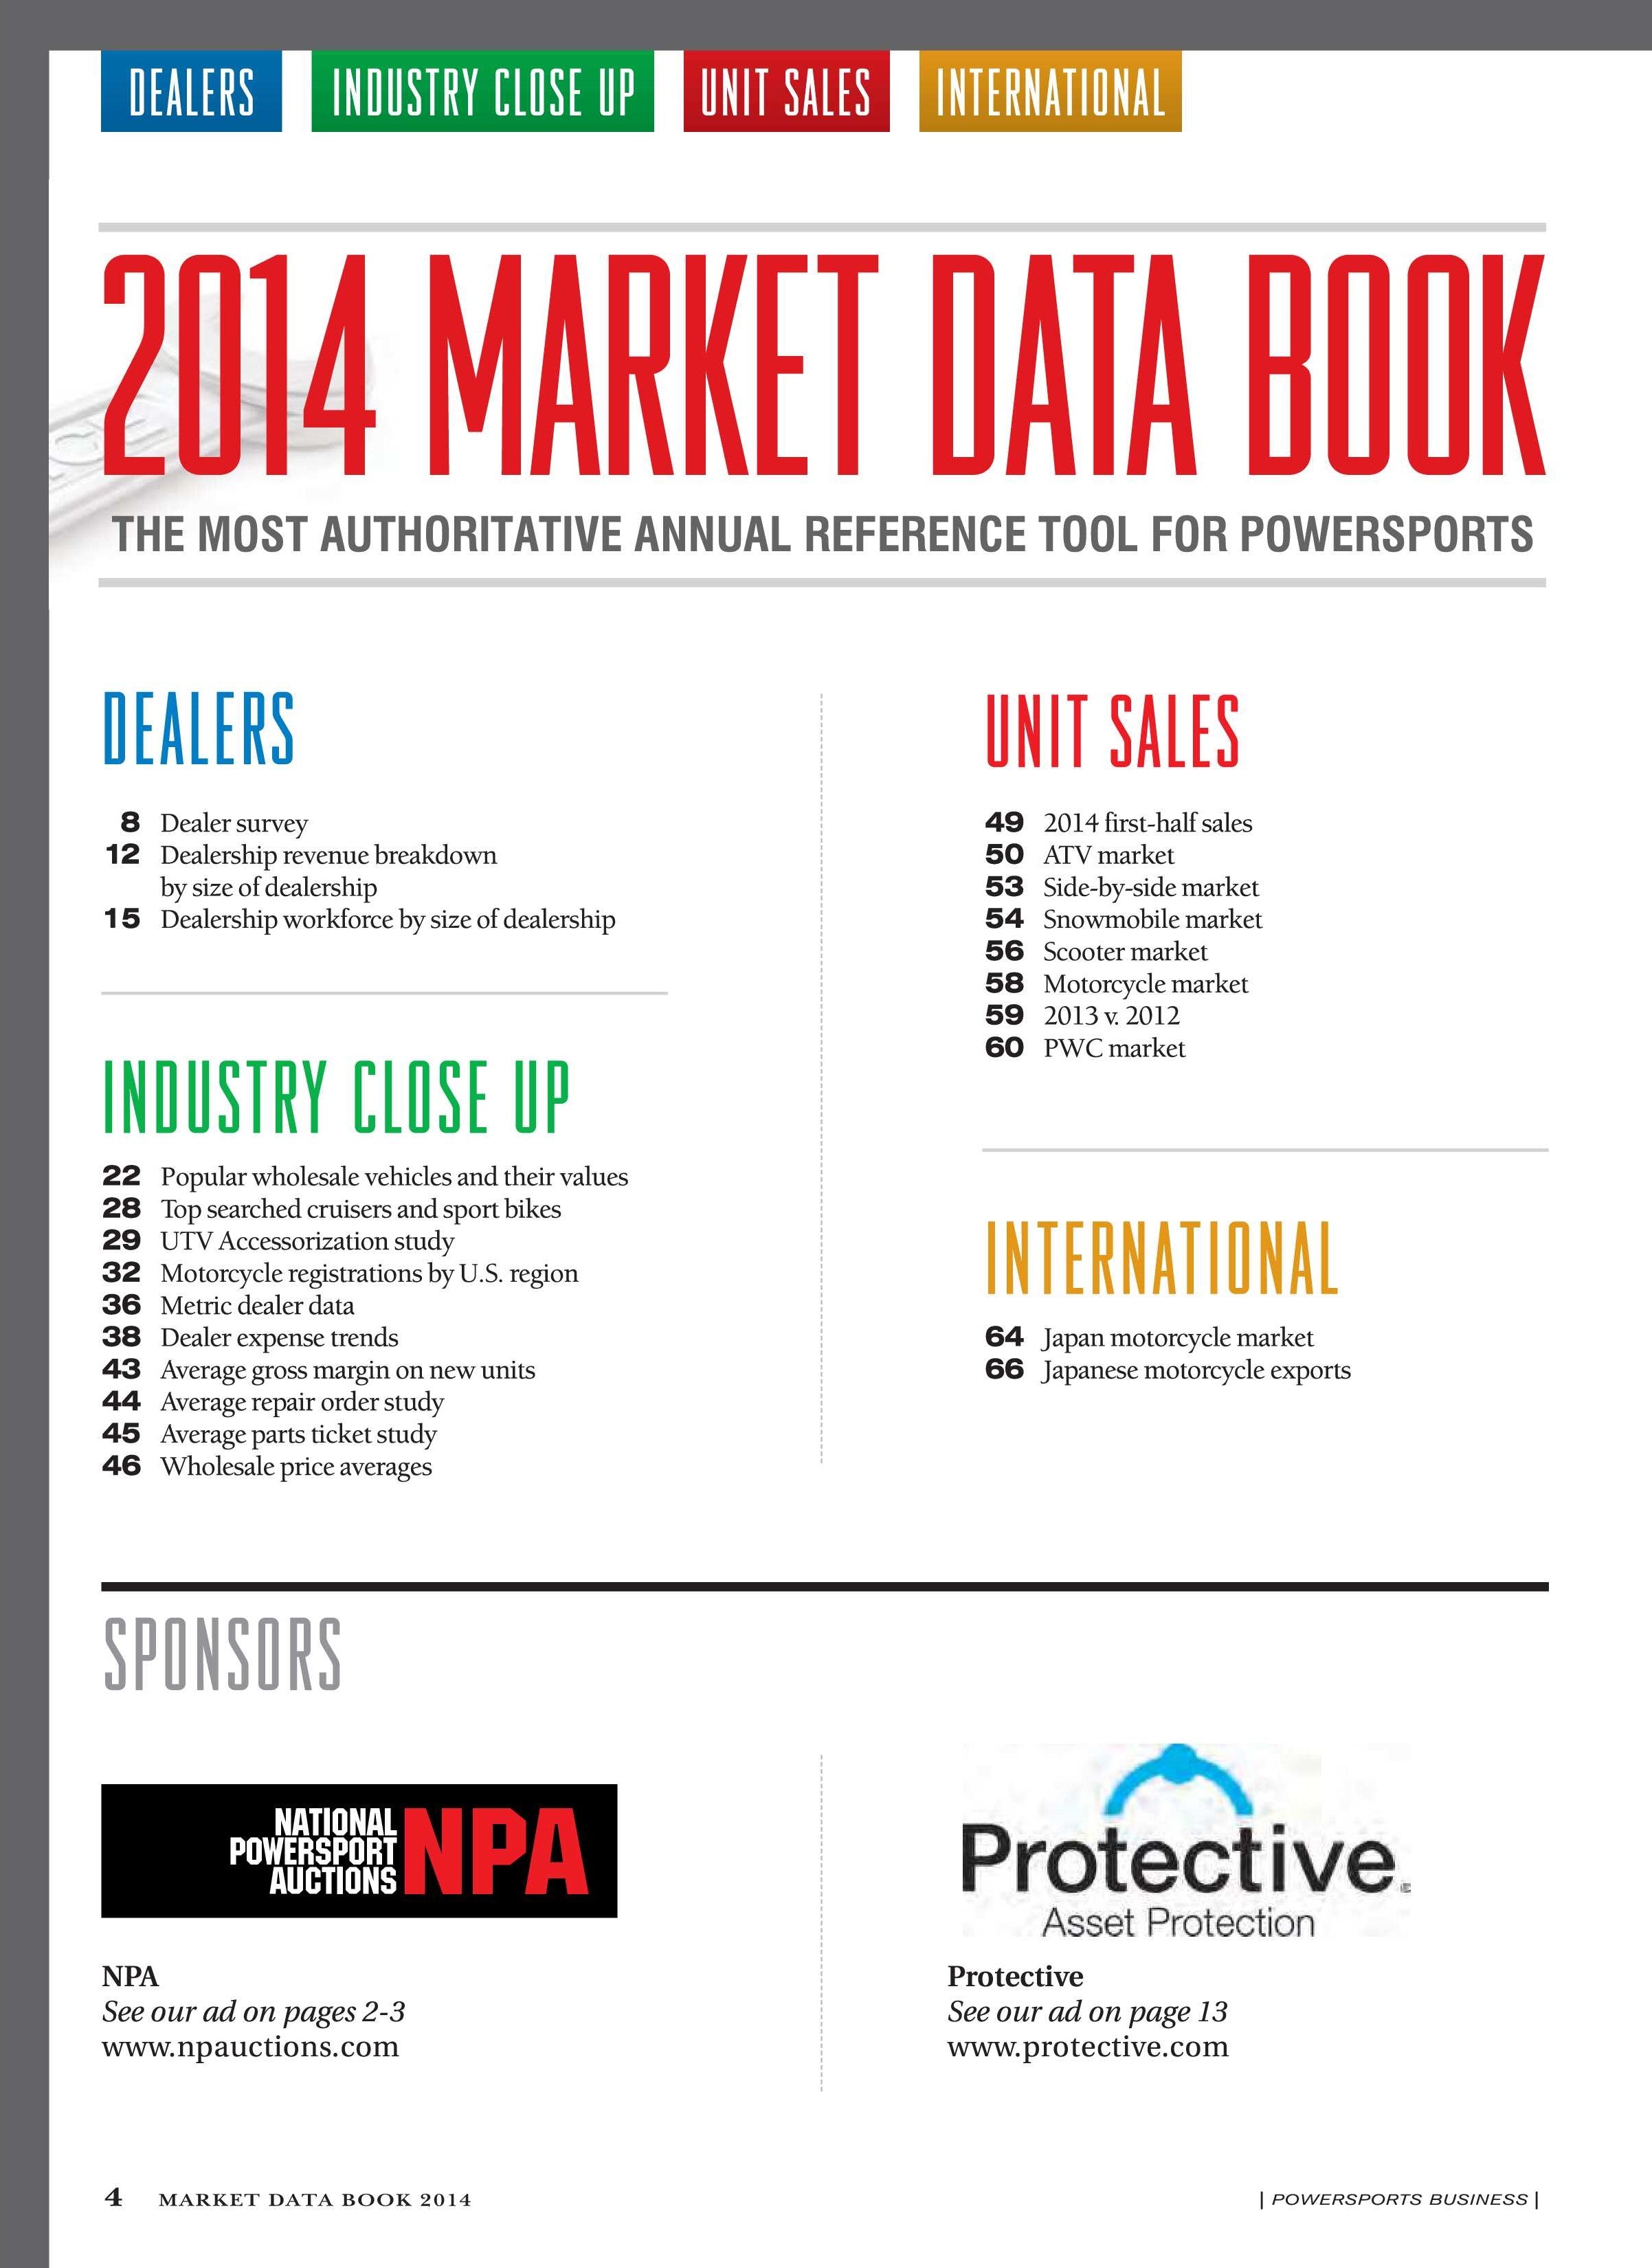 Powersports Business 2014 Market Data Book